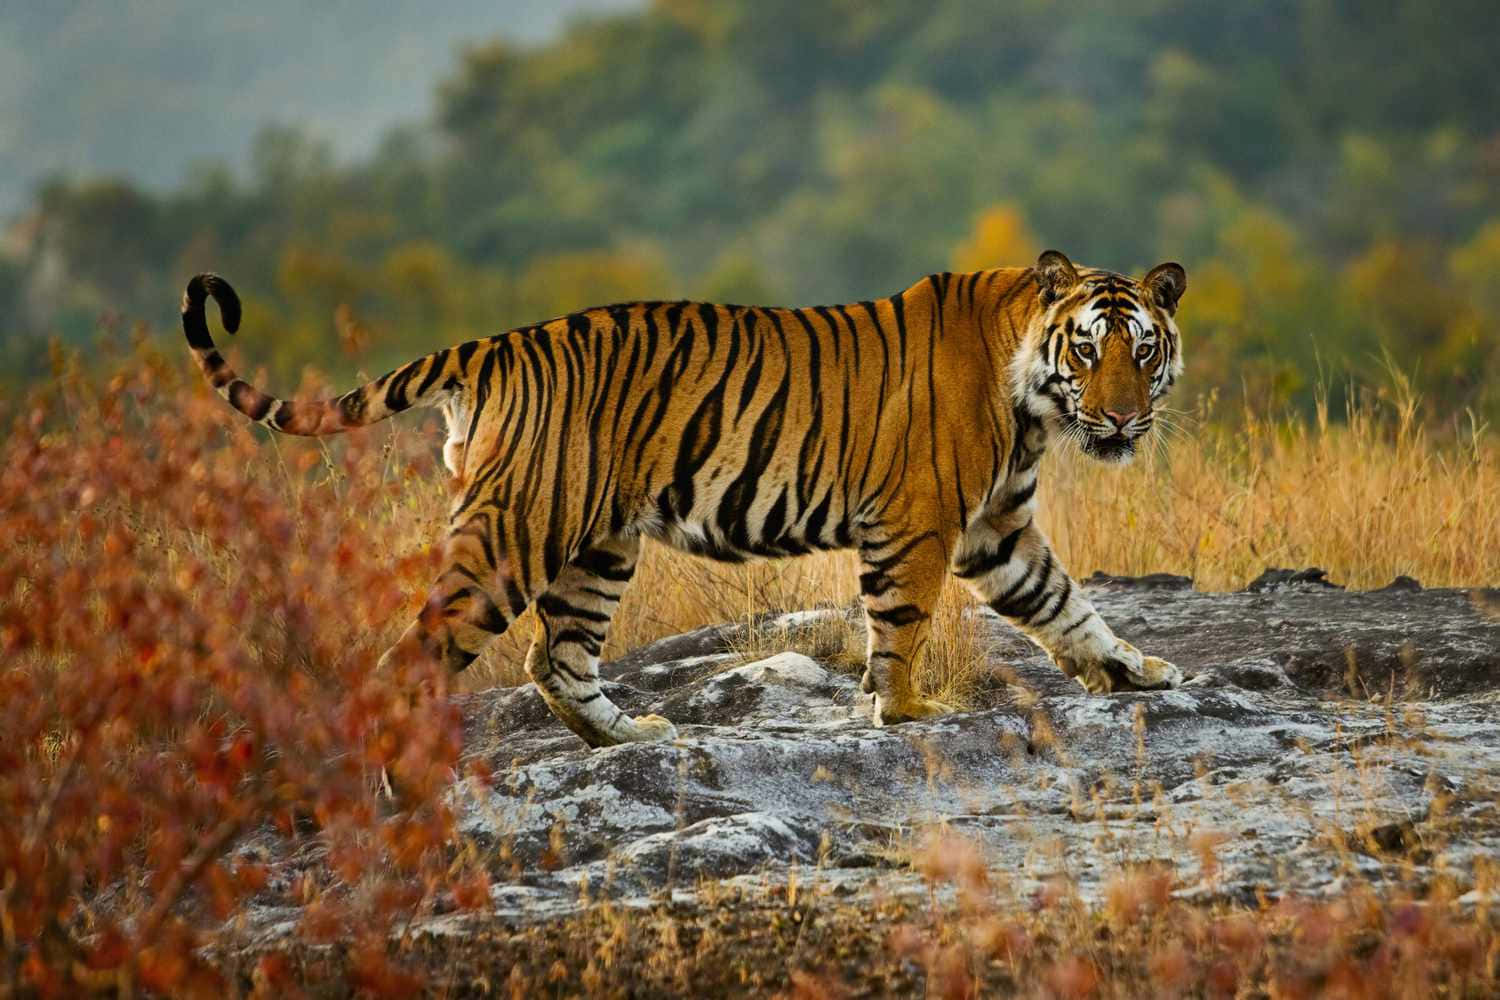 Bengal Tiger in its natural habitat, exploring its territory.